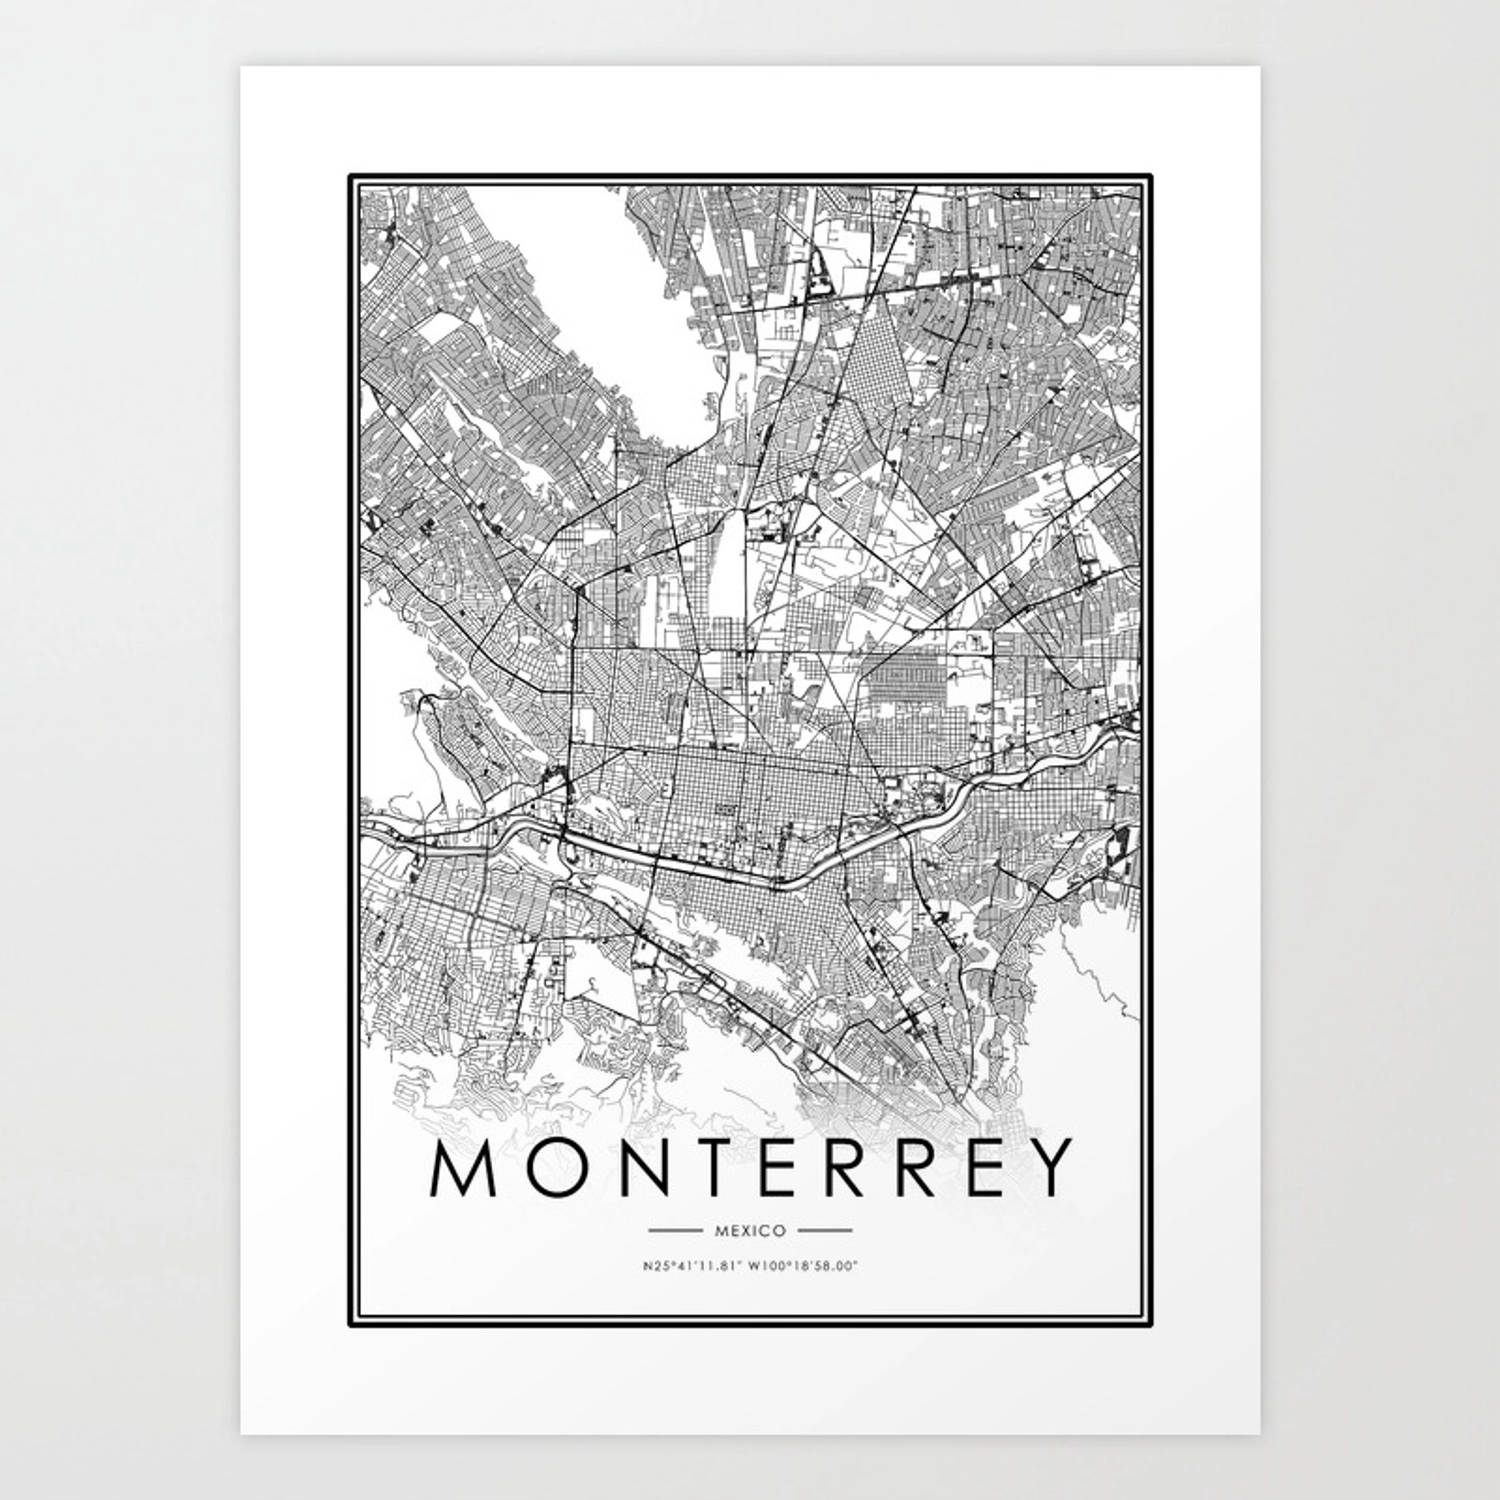 Captivating Monterrey Night View Wallpaper